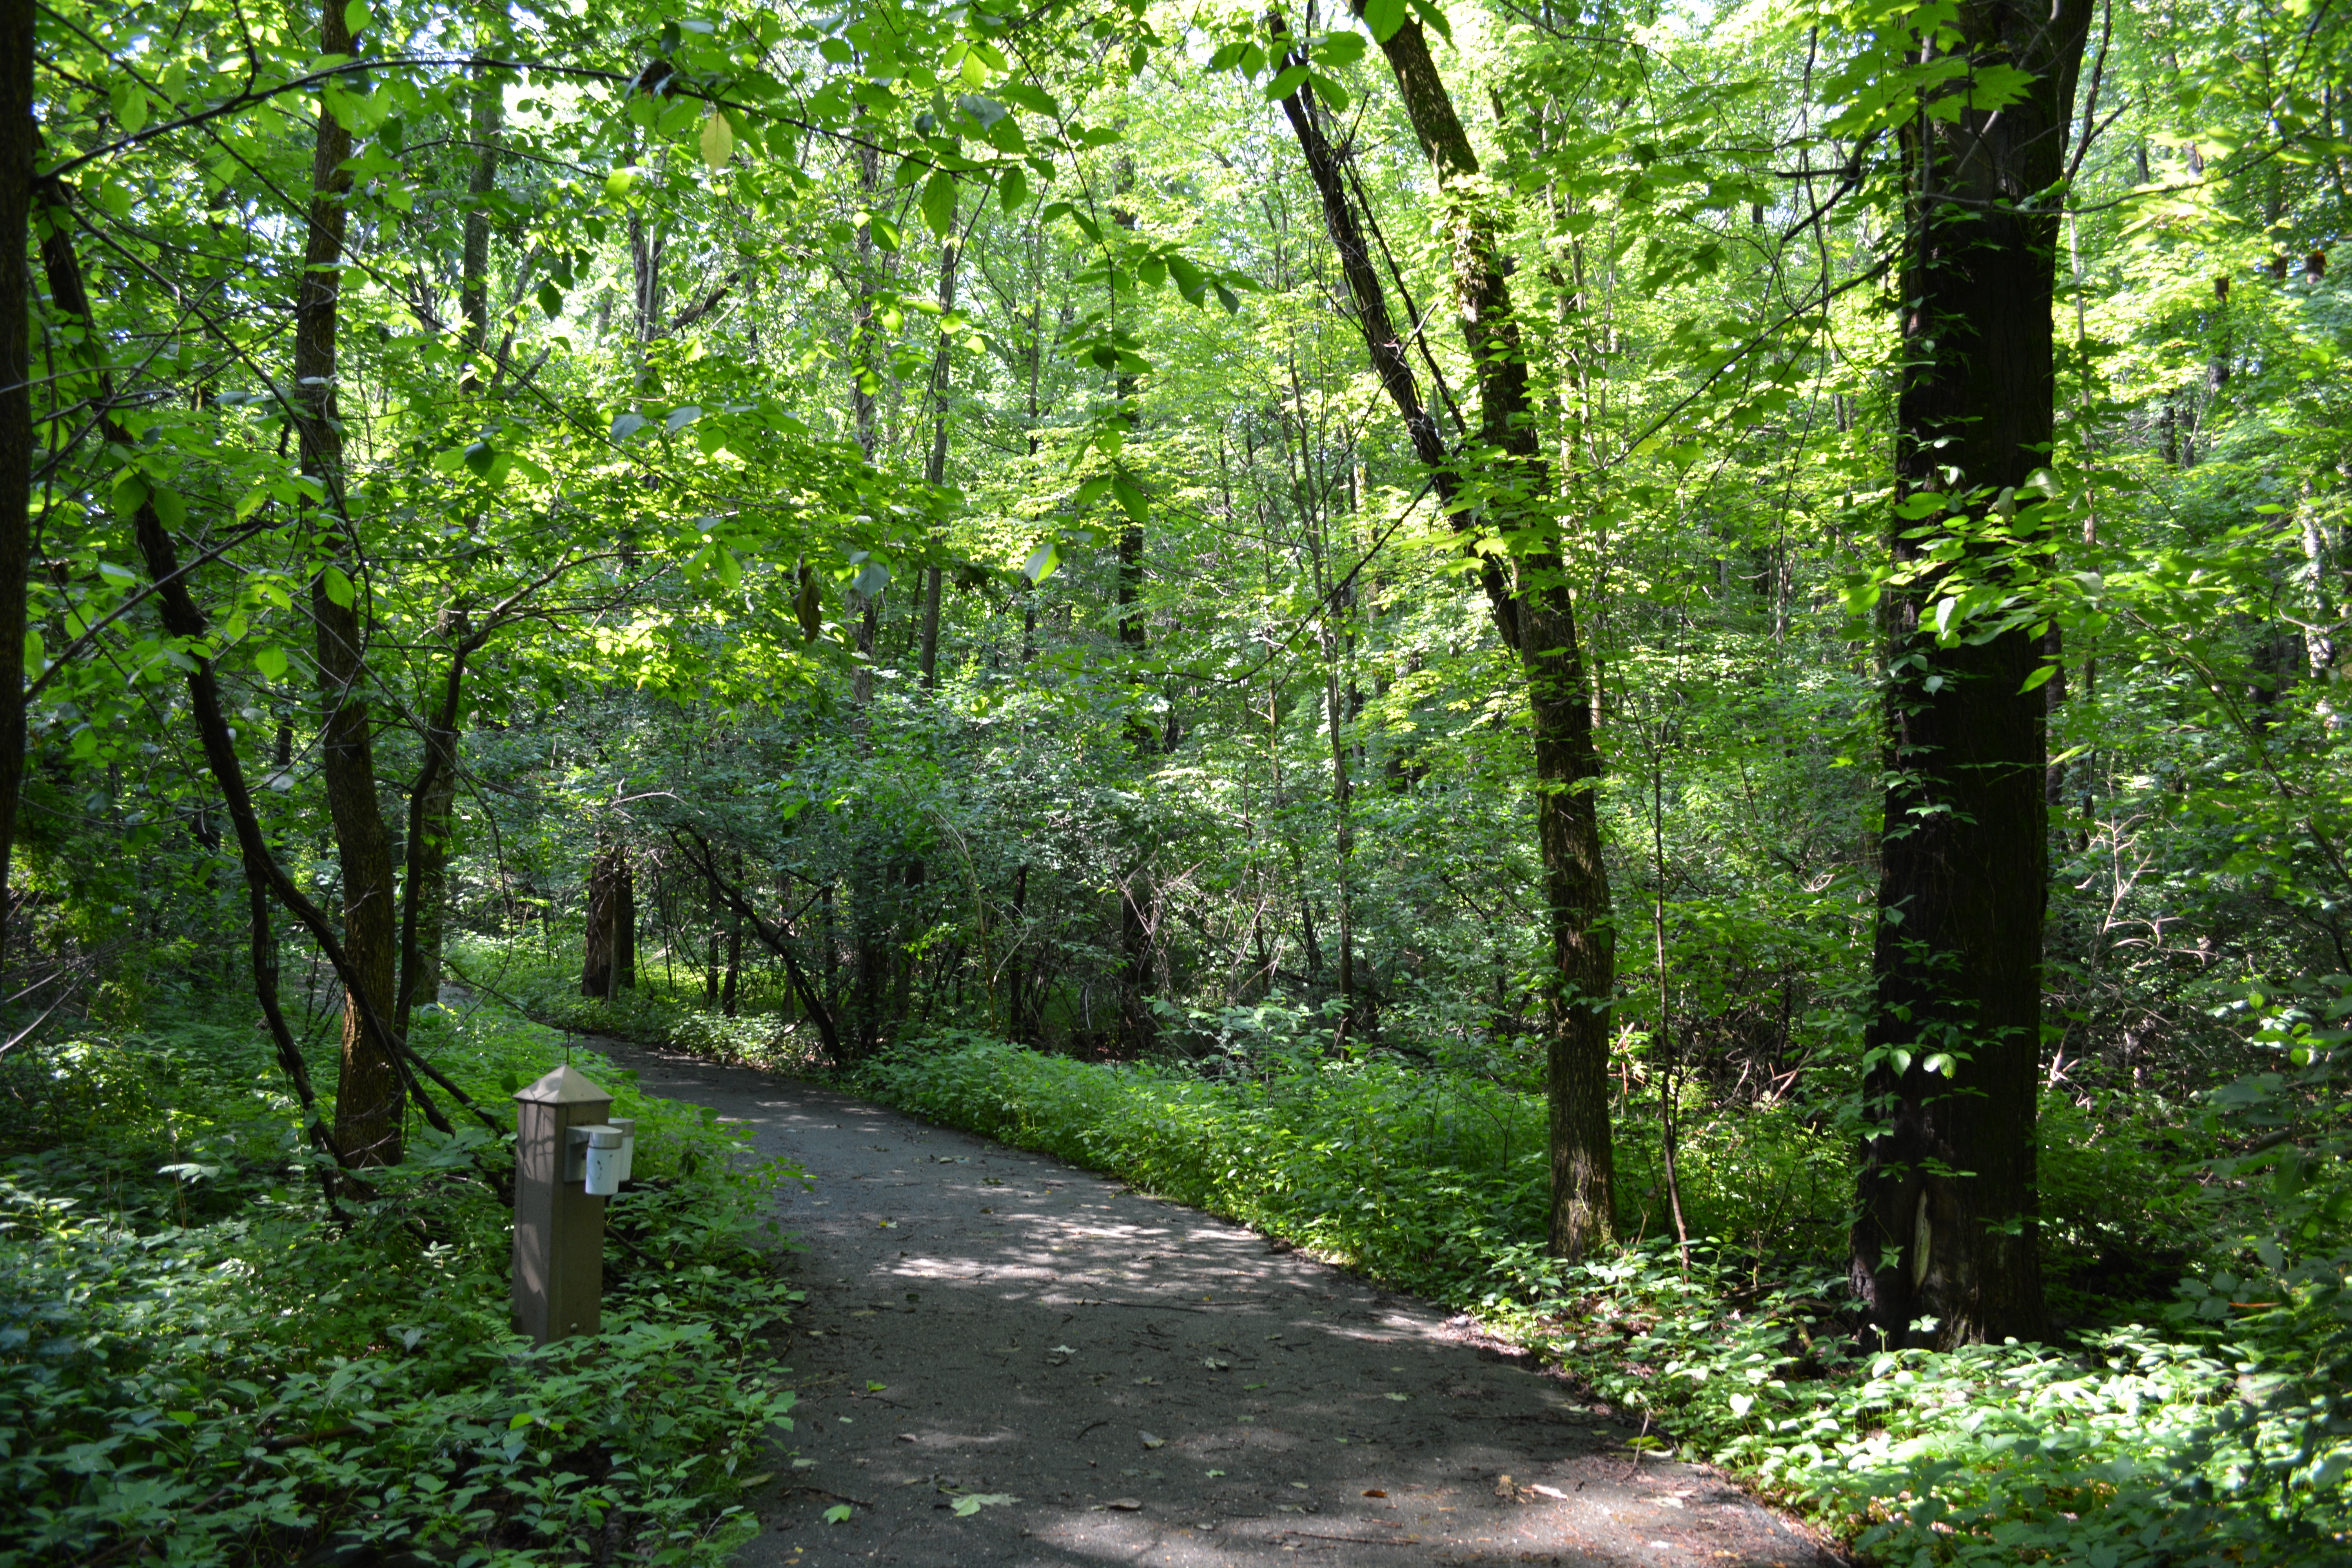 A gravel path through a forest